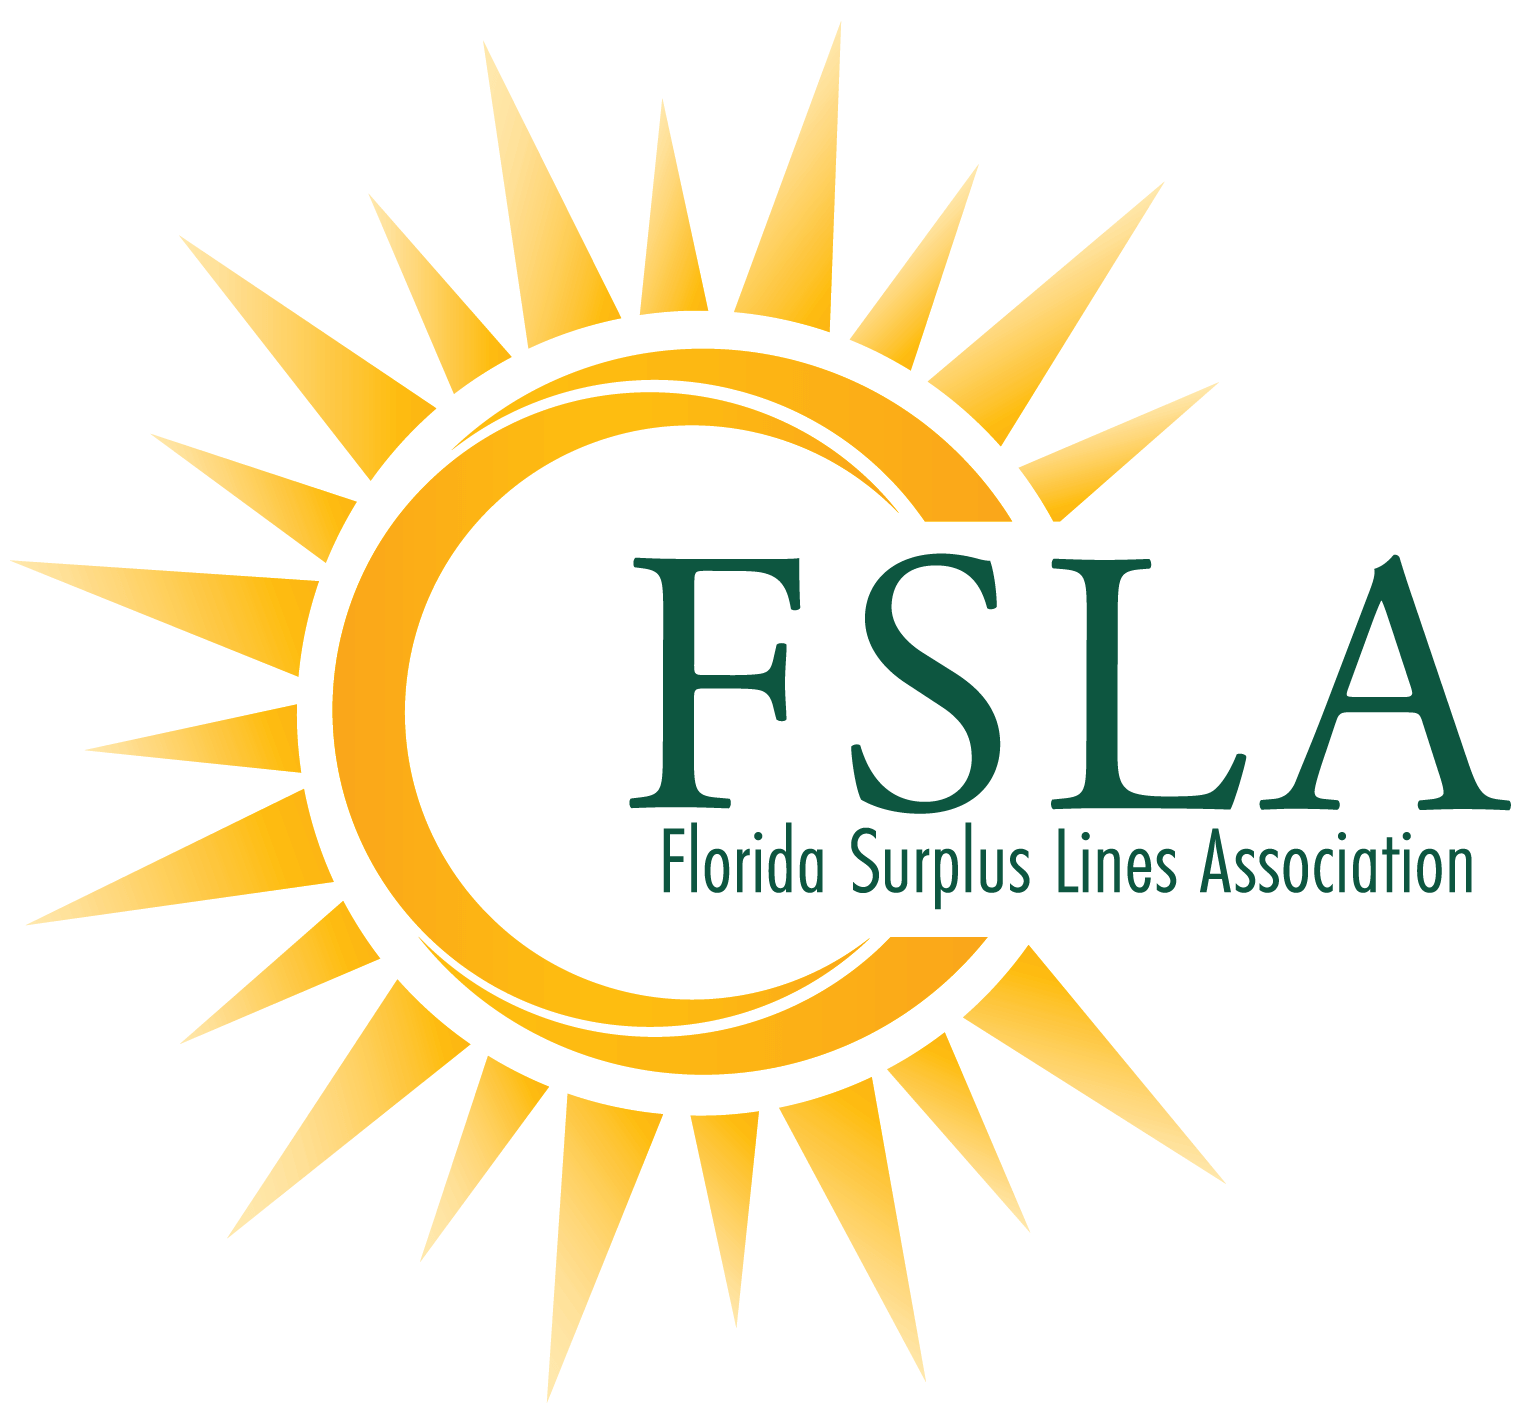 Florida Surplus Lines Association